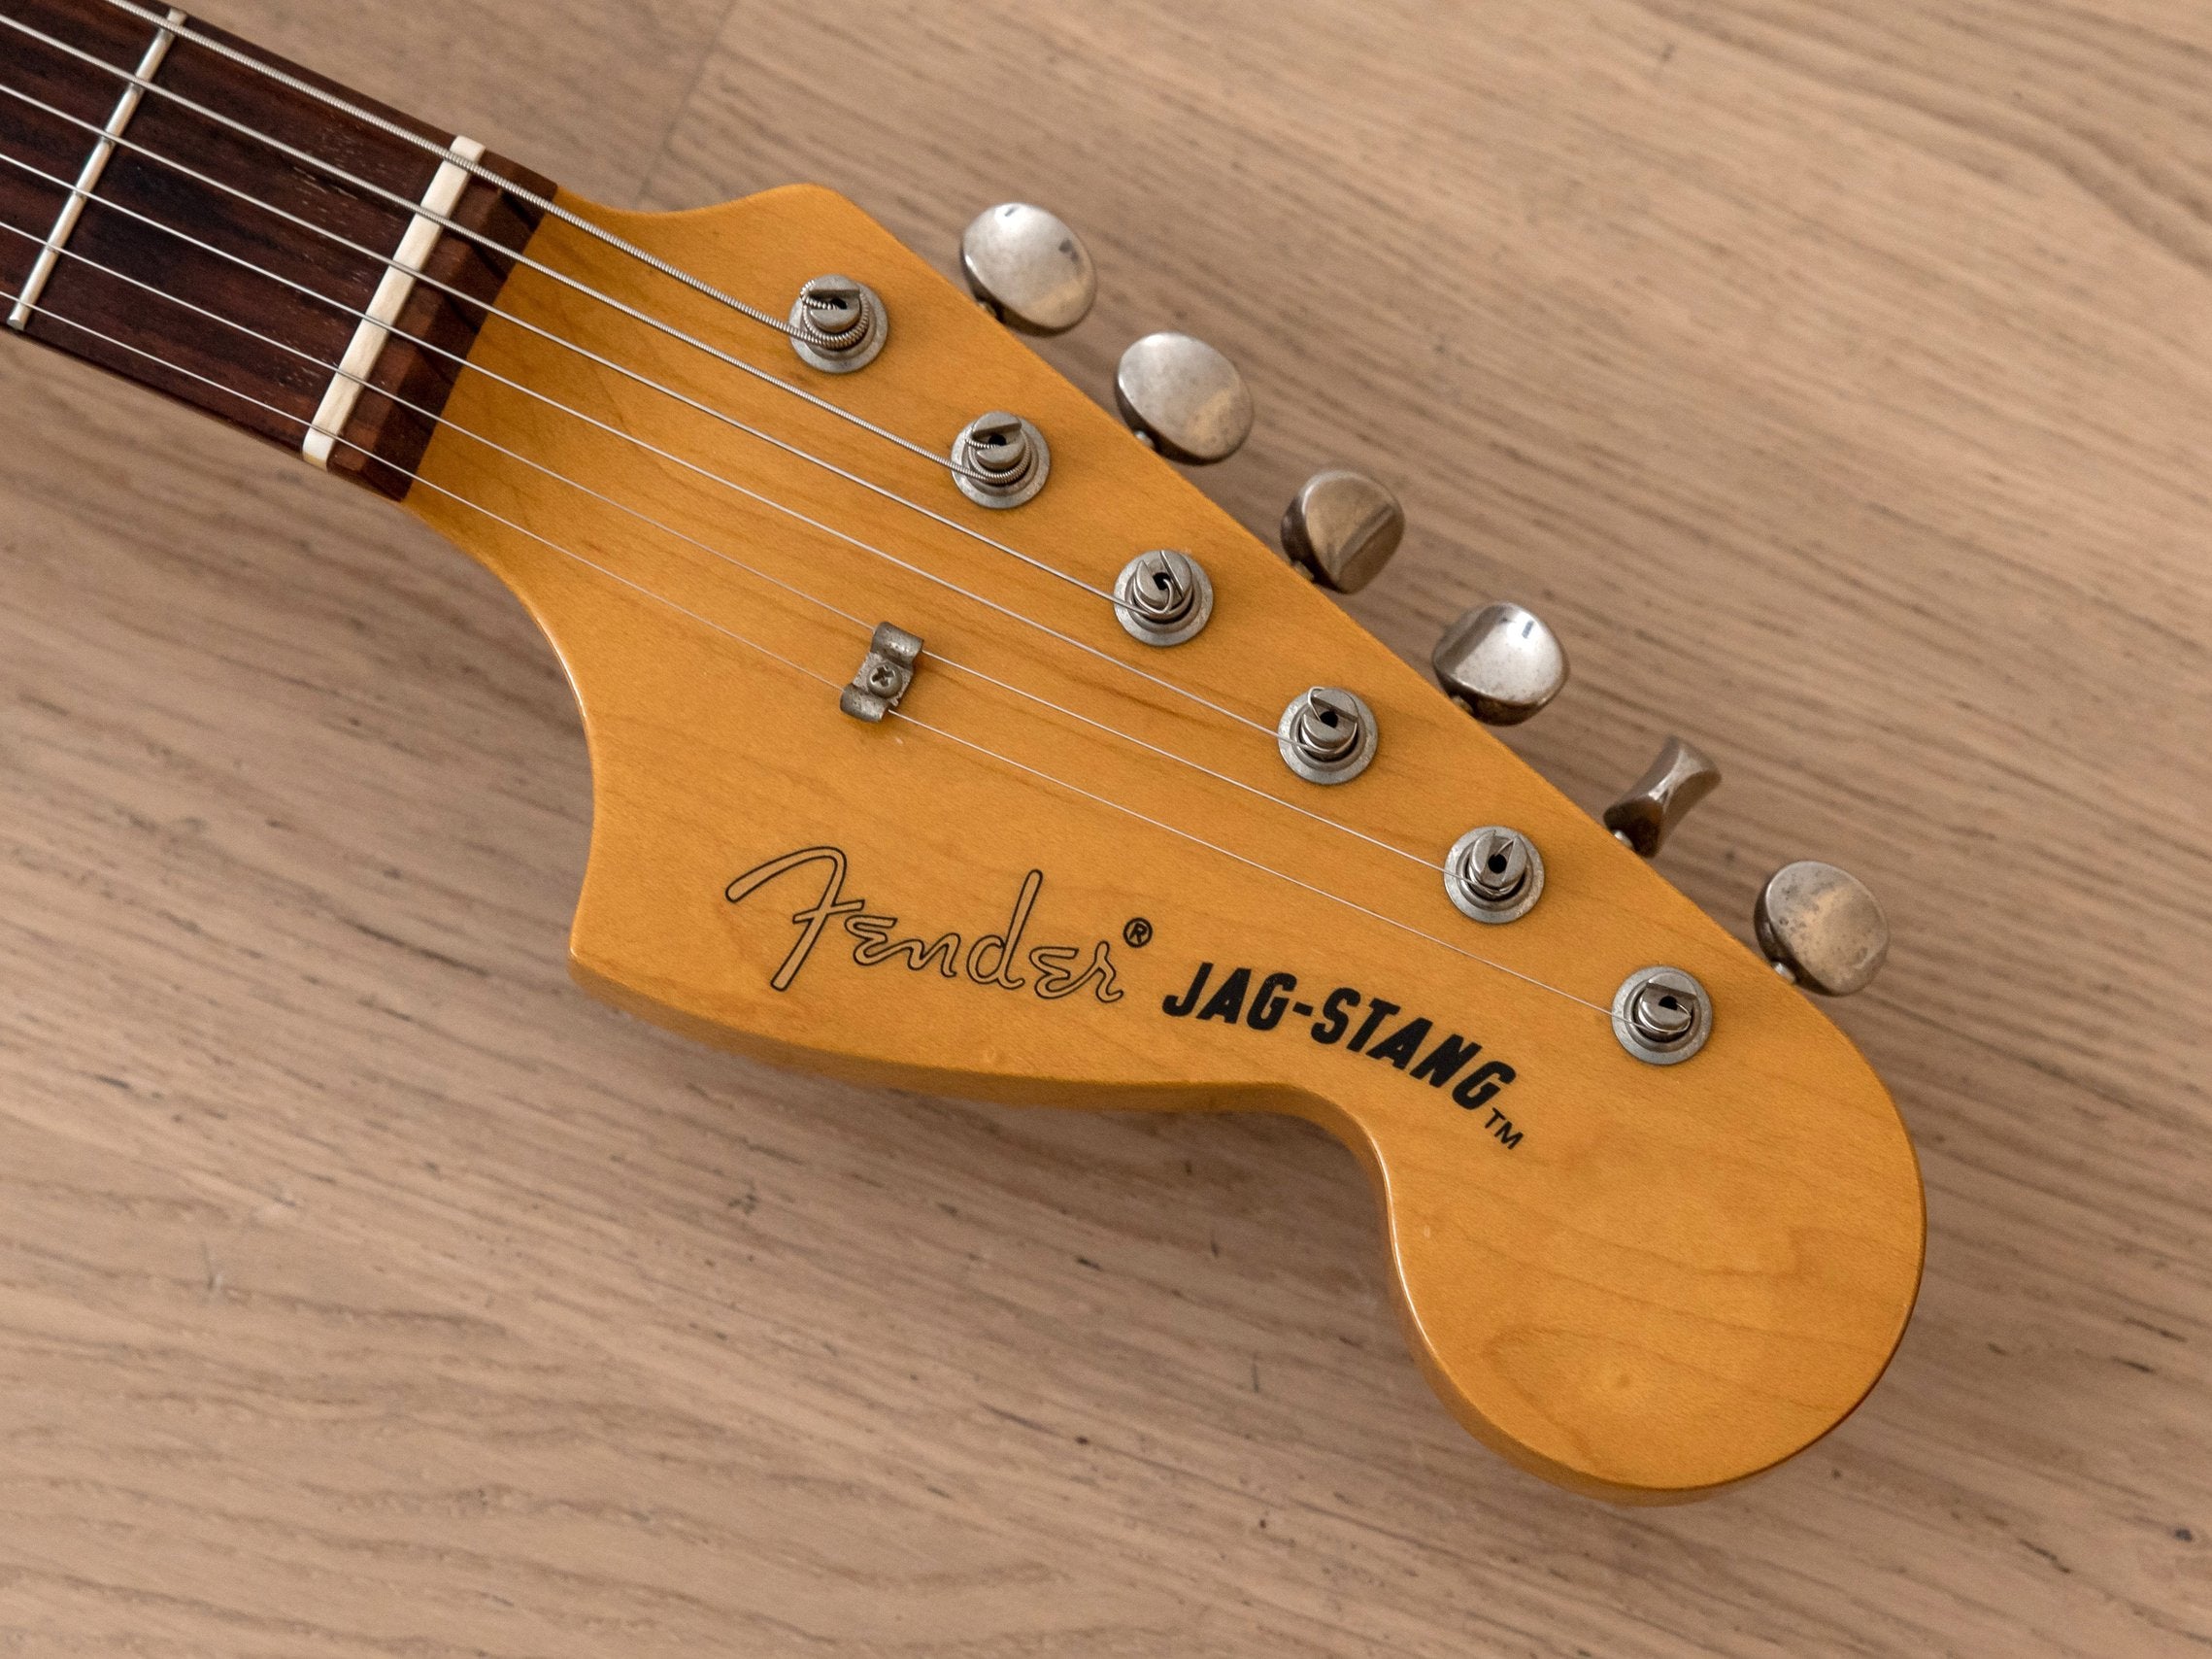 1998 Fender Jag-Stang Kurt Cobain Signature Offset Electric Guitar Sonic Blue 100% Original, Japan CIJ